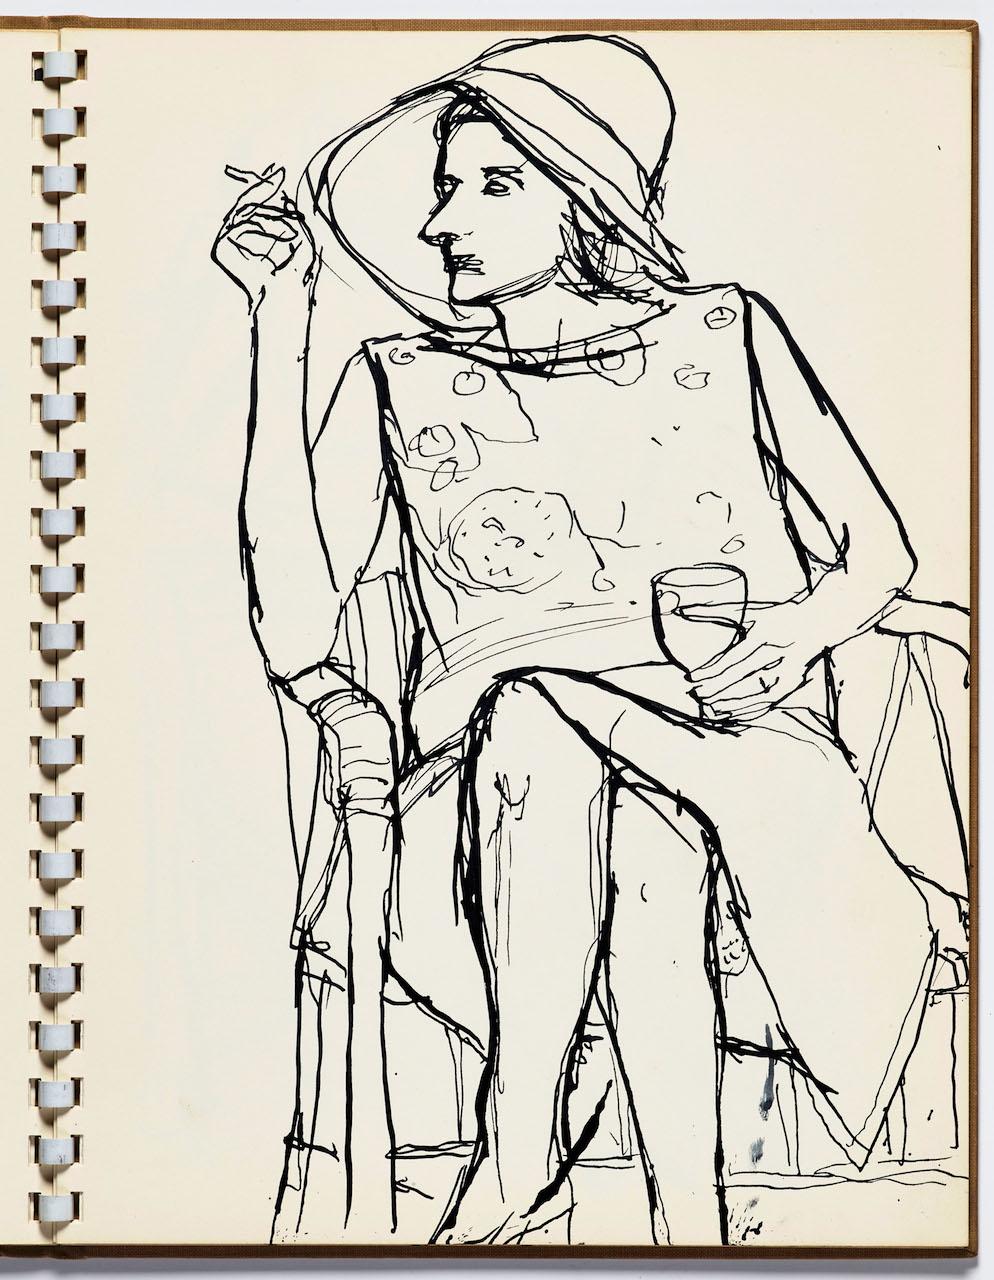 Richard Diebenkorn, Untitled from Sketchbook #13, page 13 (1965 66), pen